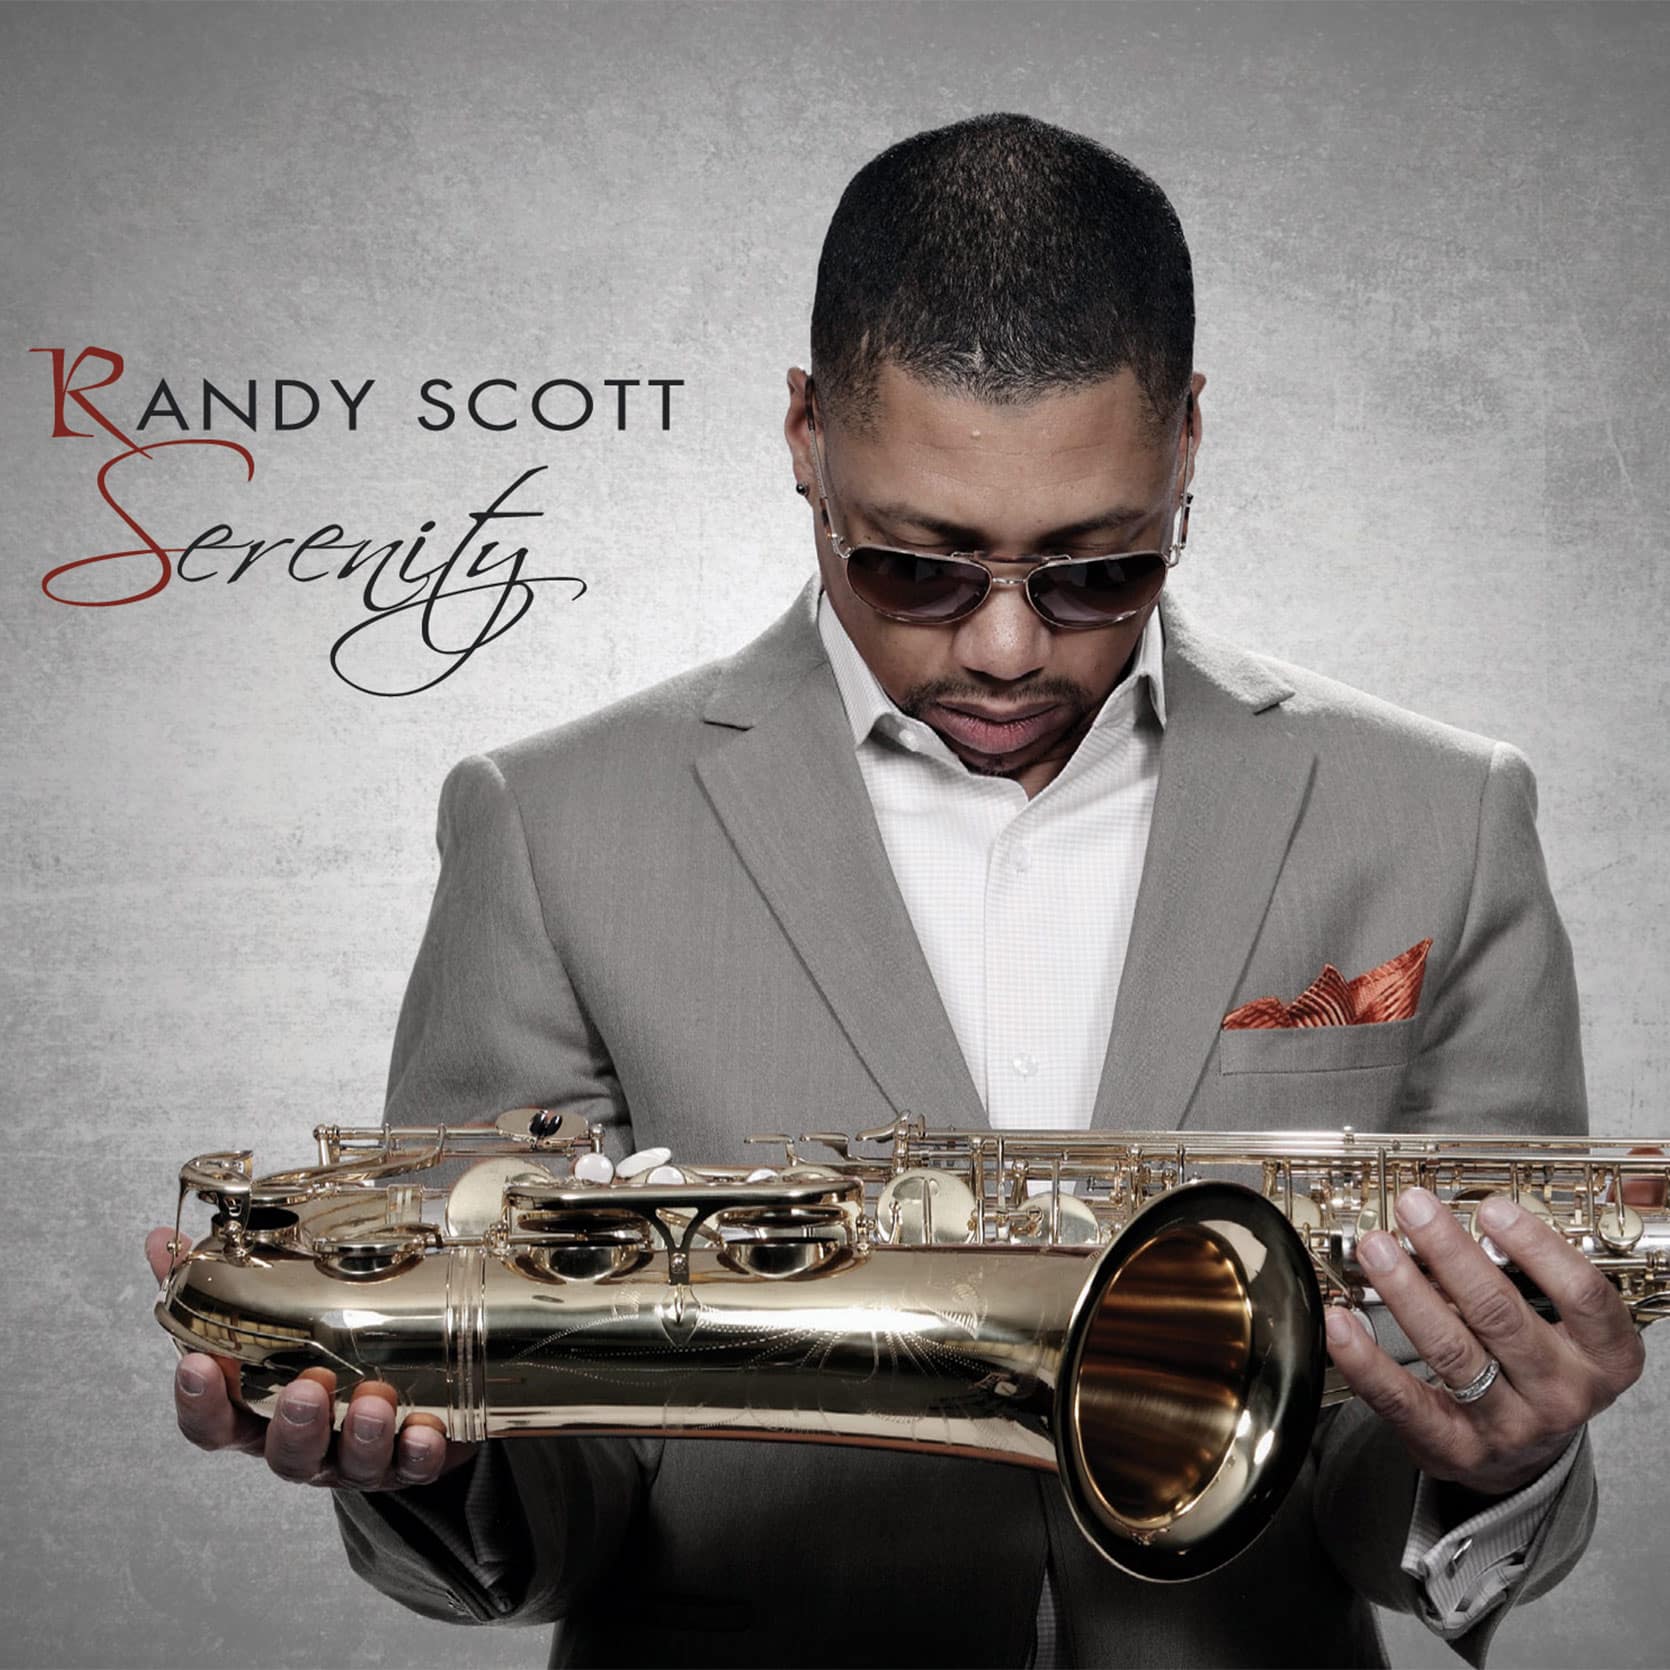 Listen to Serenity by Smooth Jazz recording artist Randy Scott